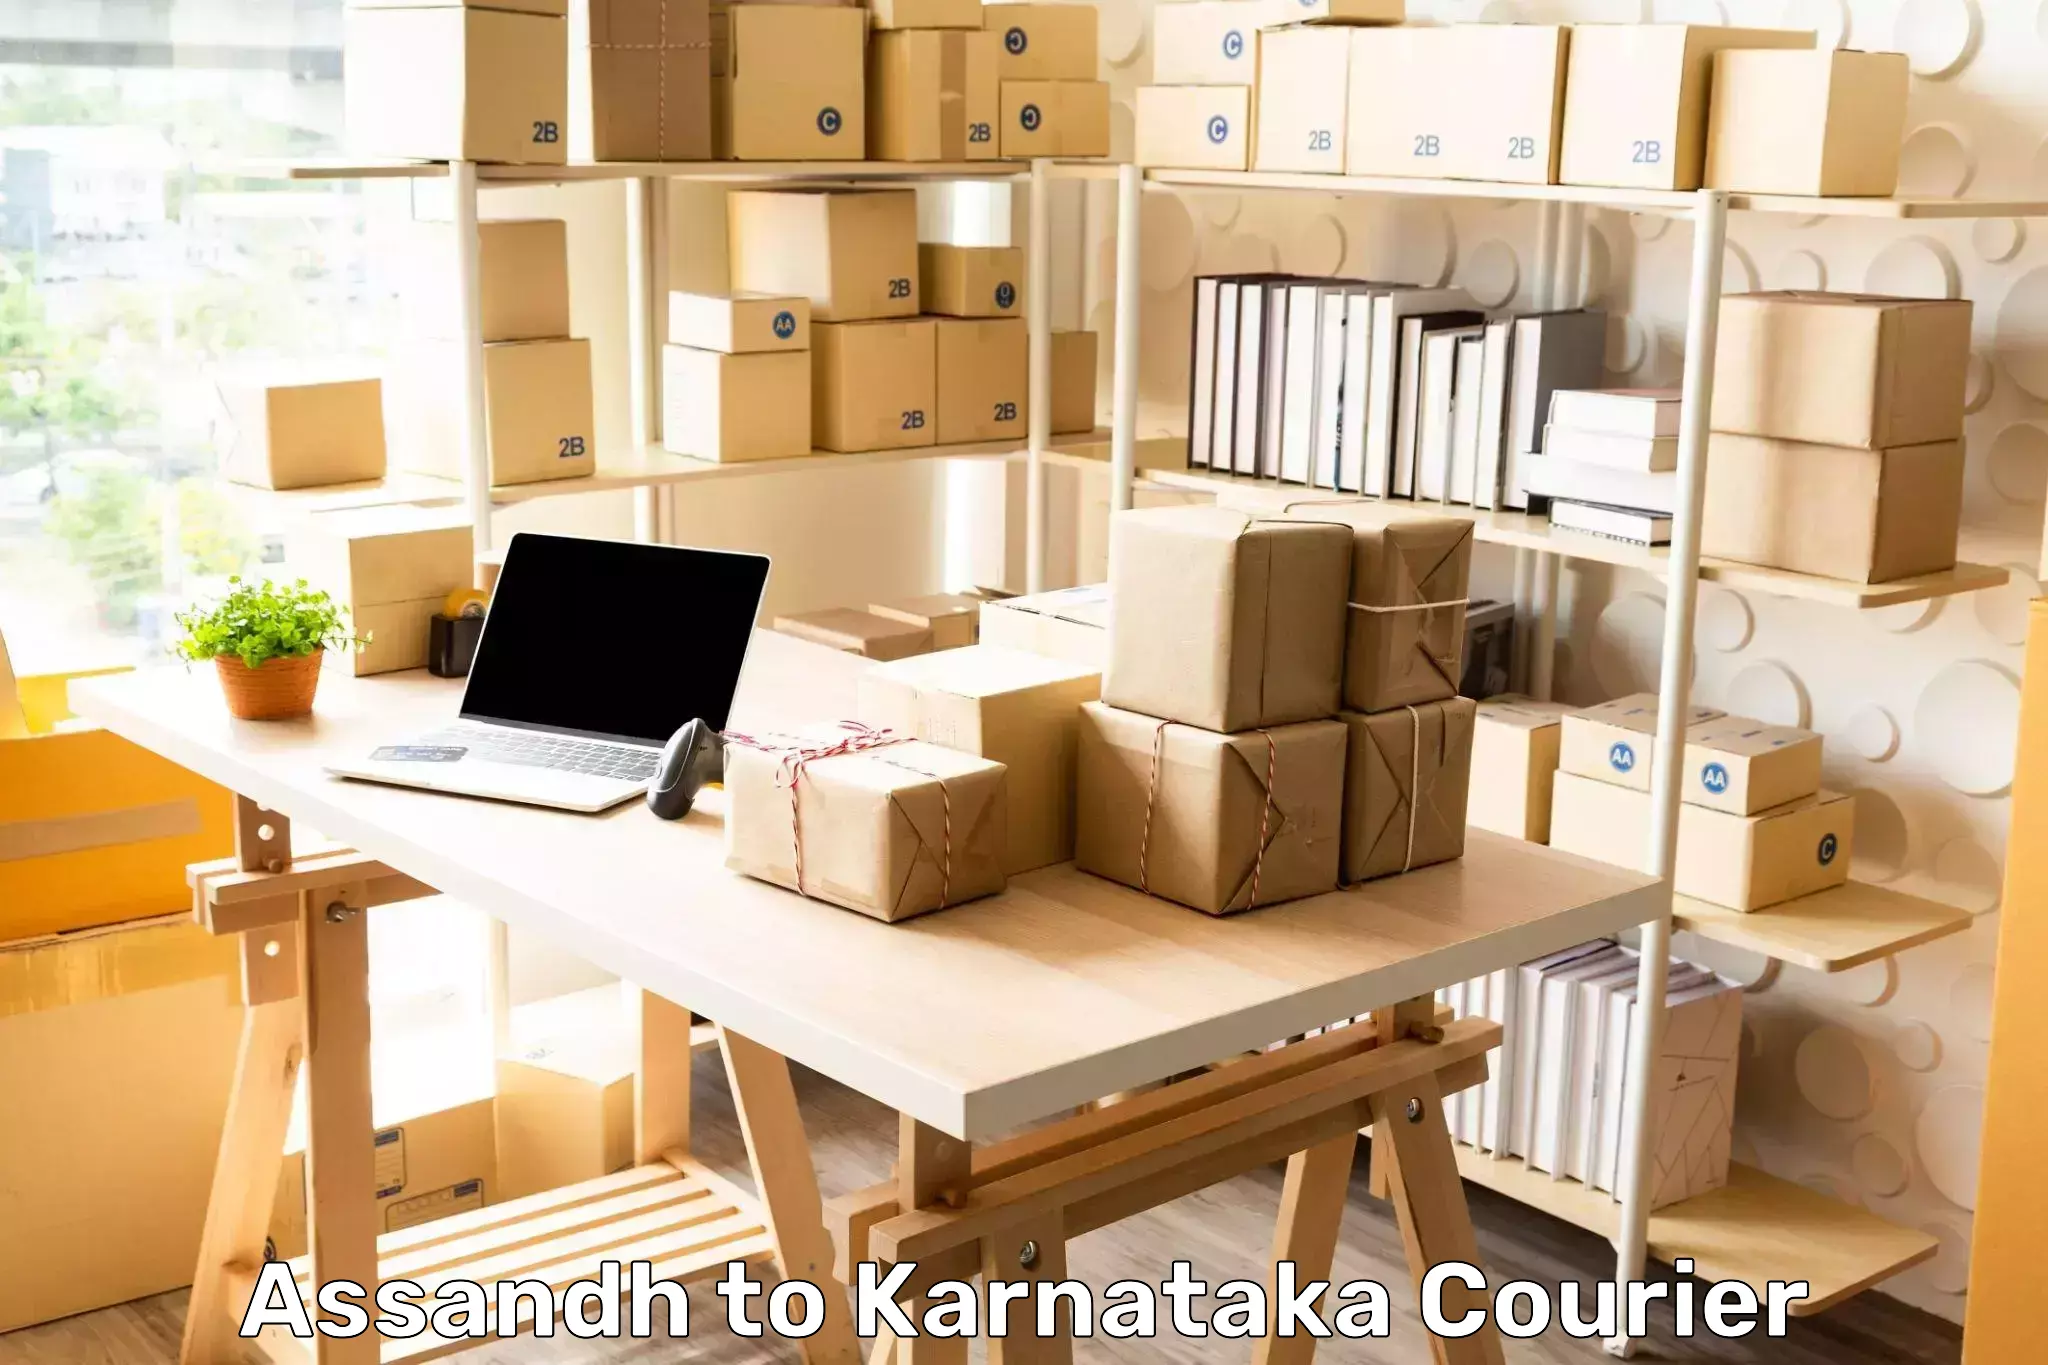 Local courier options Assandh to Karnataka